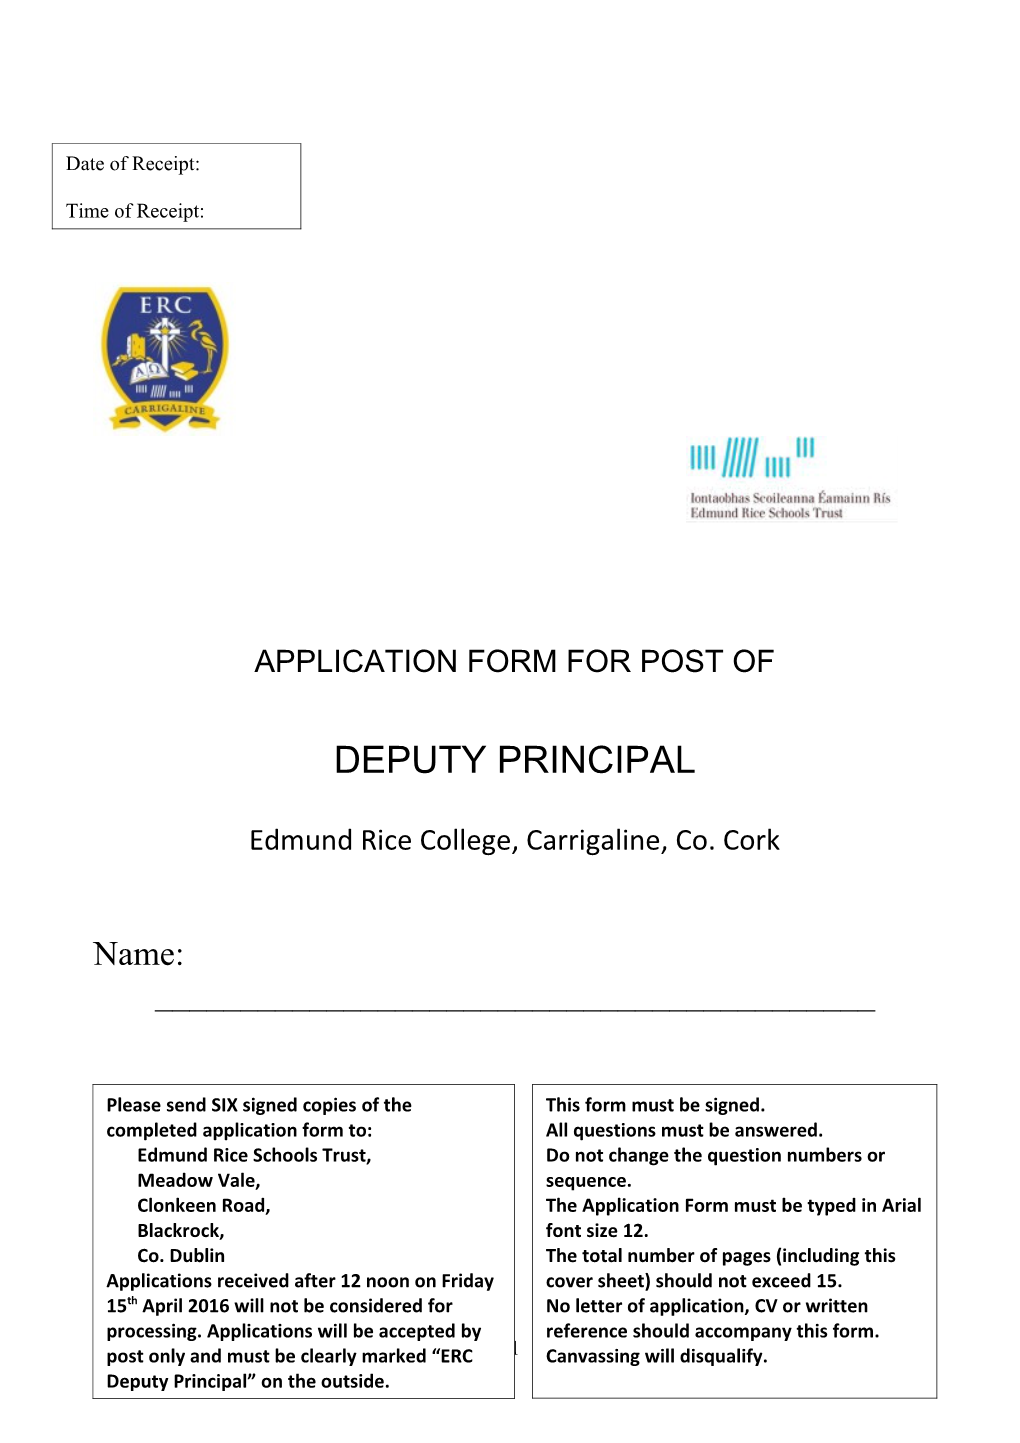 Edmund Rice College, Carrigaline, Co. Cork